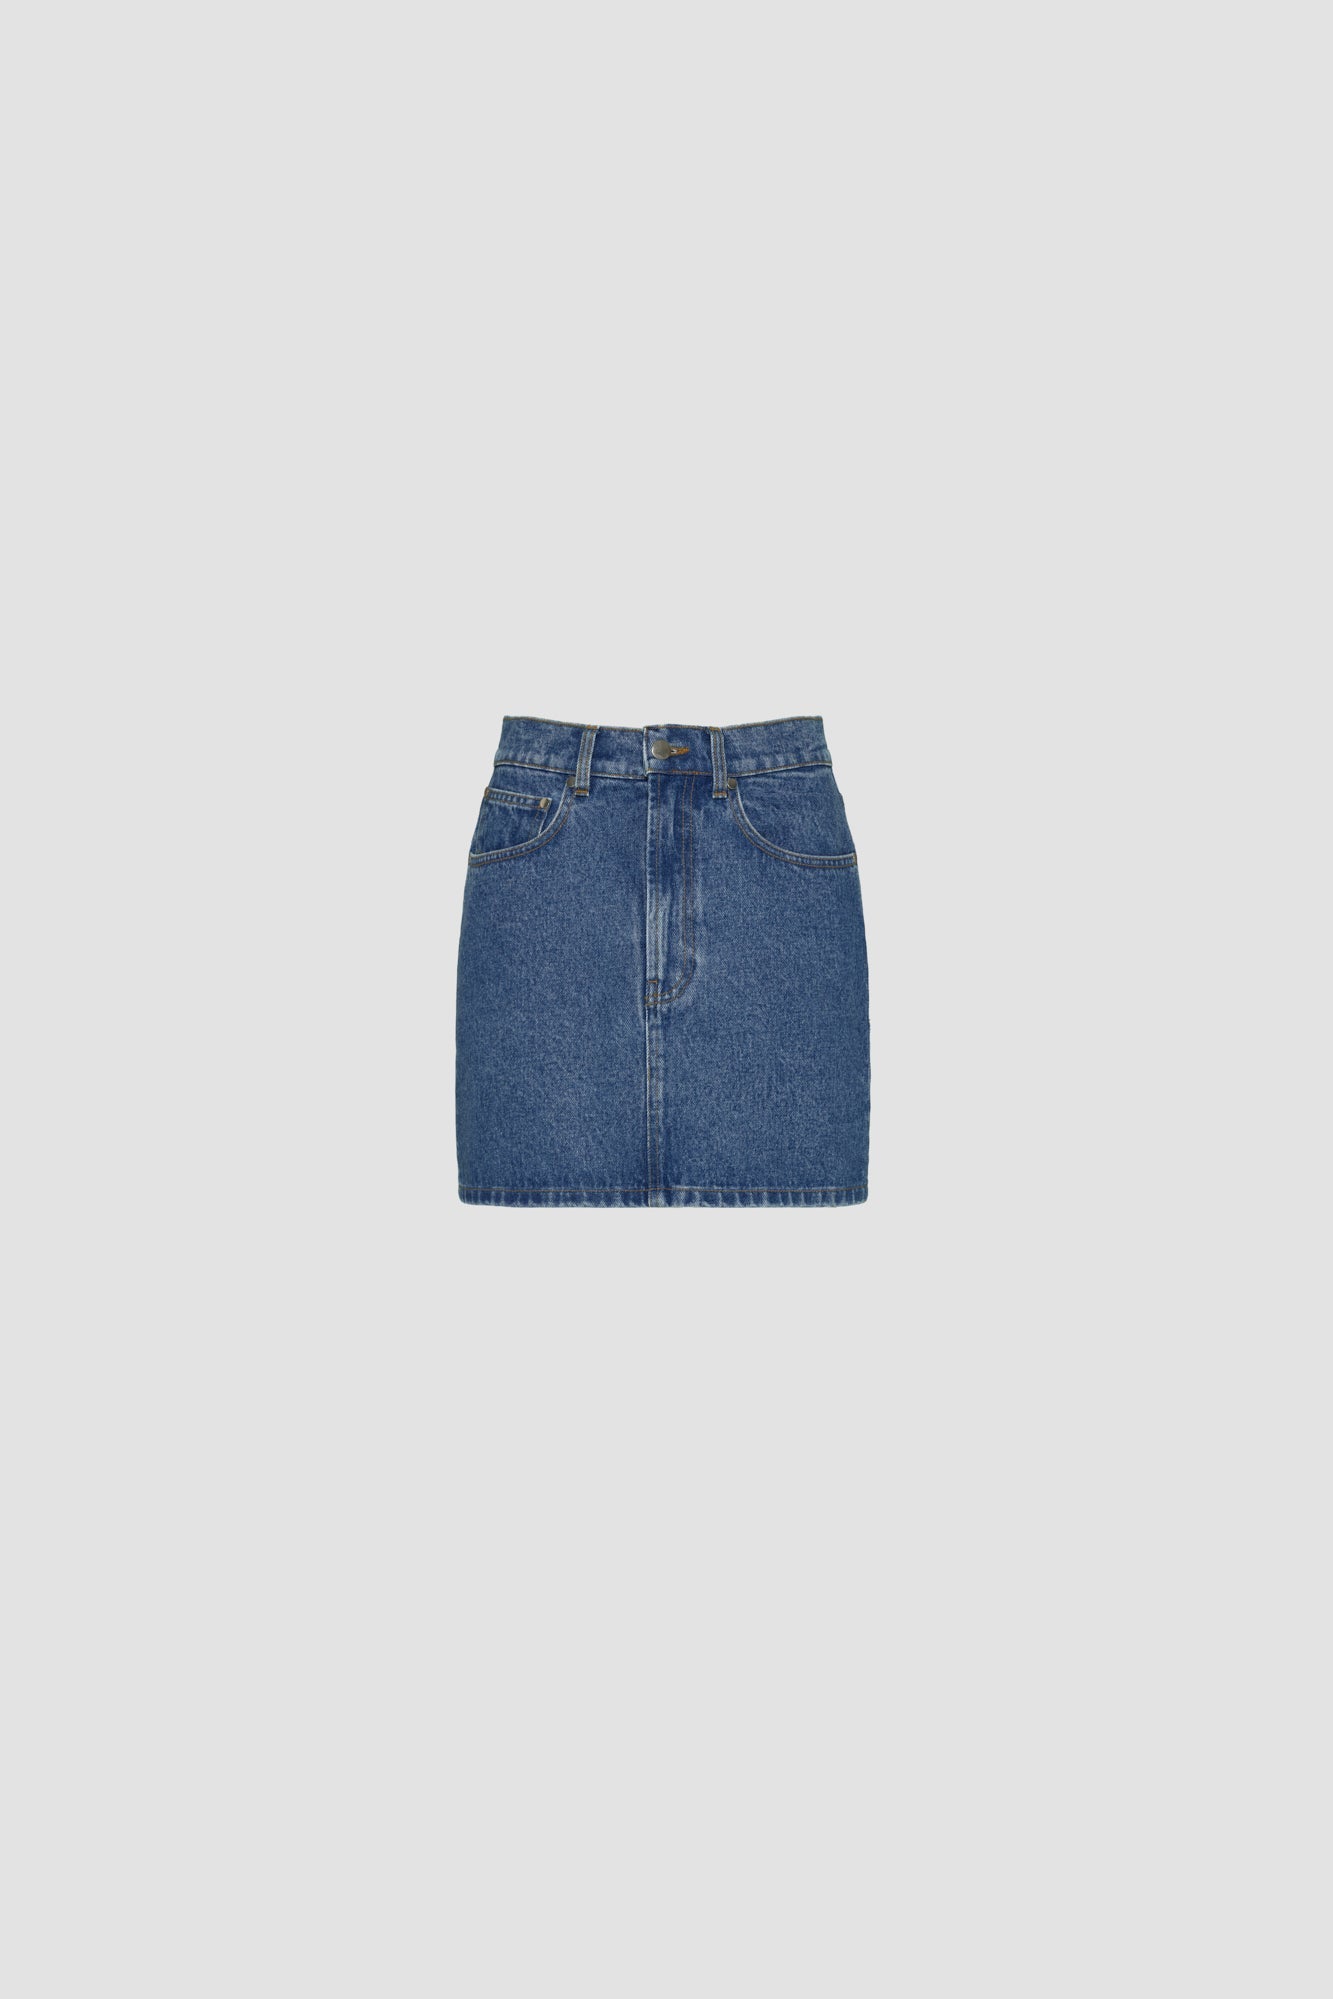 The Proper Denim Skirt ™ - The Proper Label ™